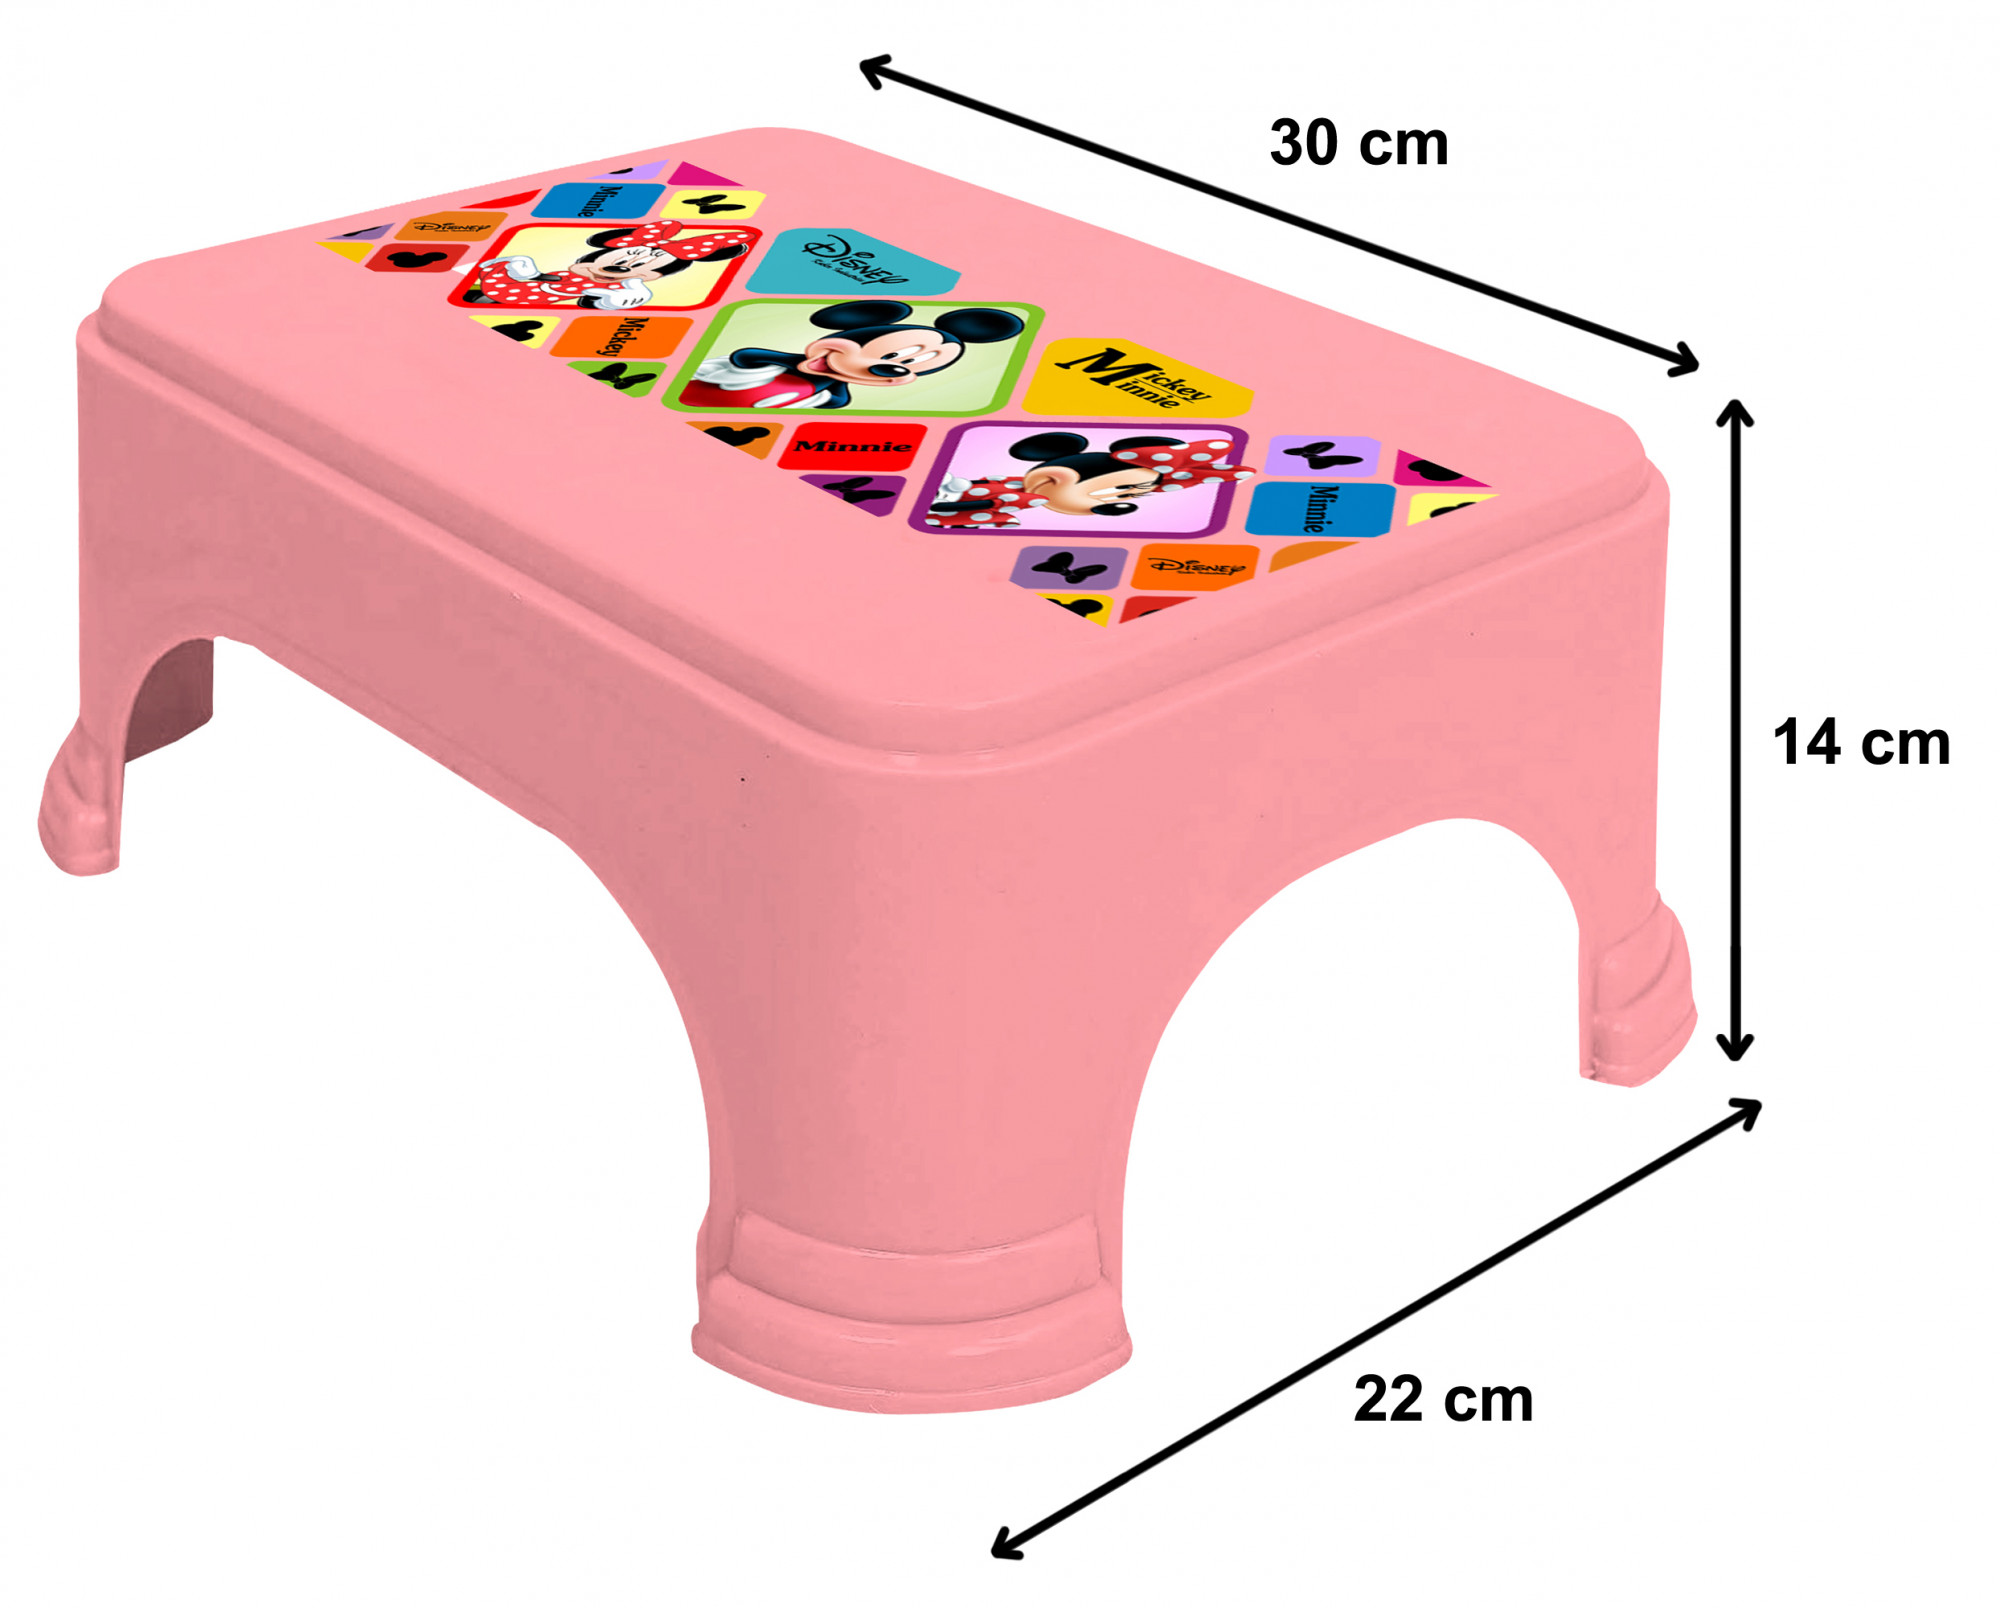 Kuber Industries Disney Mickey Minnie Print Square Plastic Bathroom Stool (Pink) -HS_35_KUBMART17693